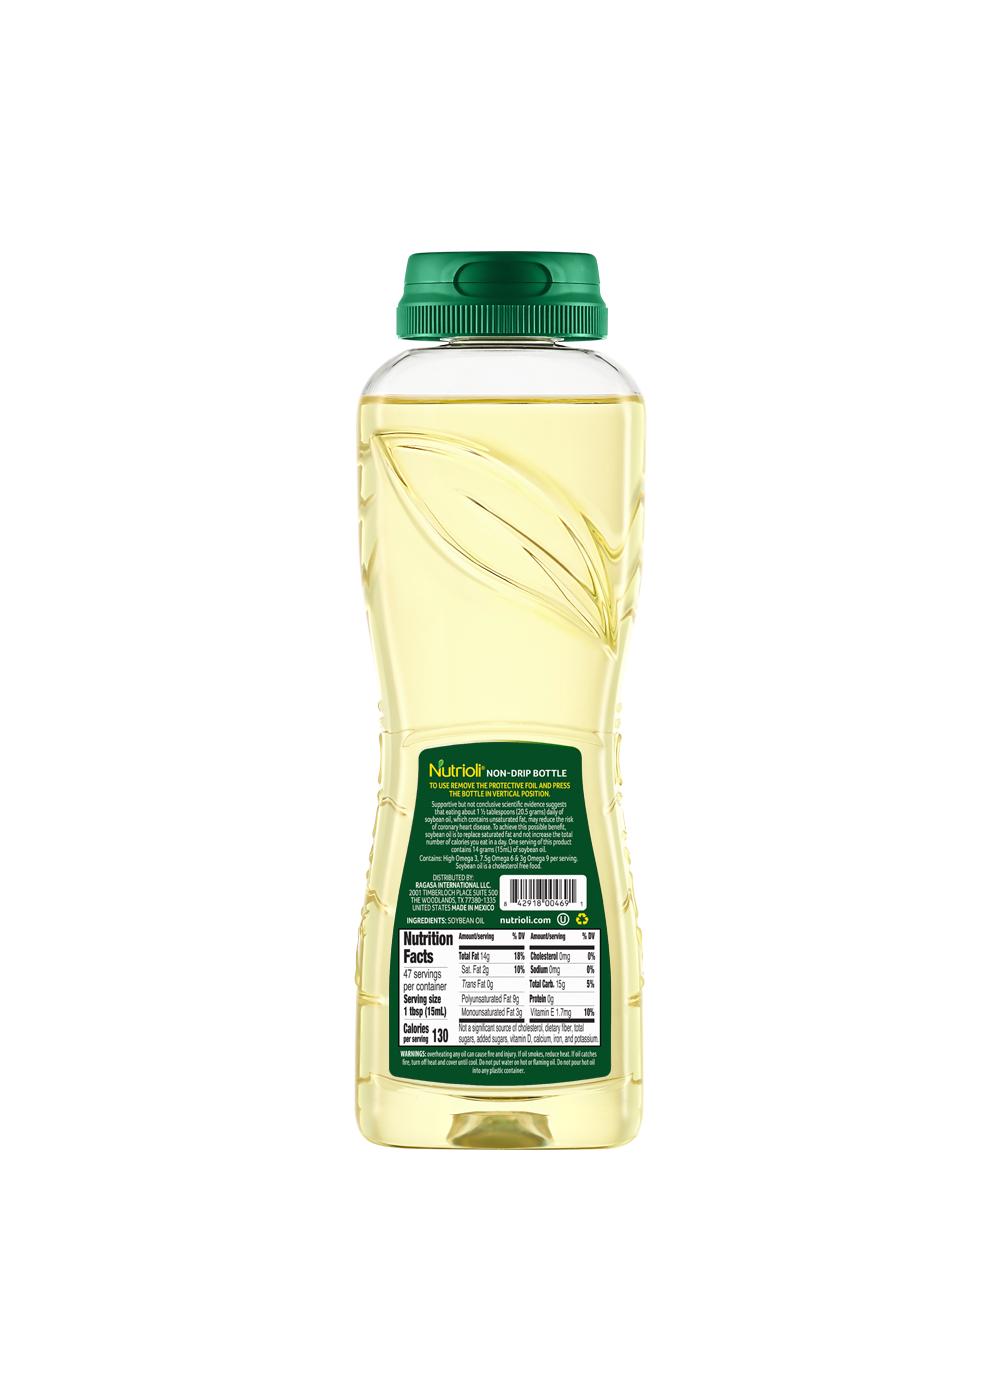 Nutrioli Pure Soybean Oil; image 2 of 2